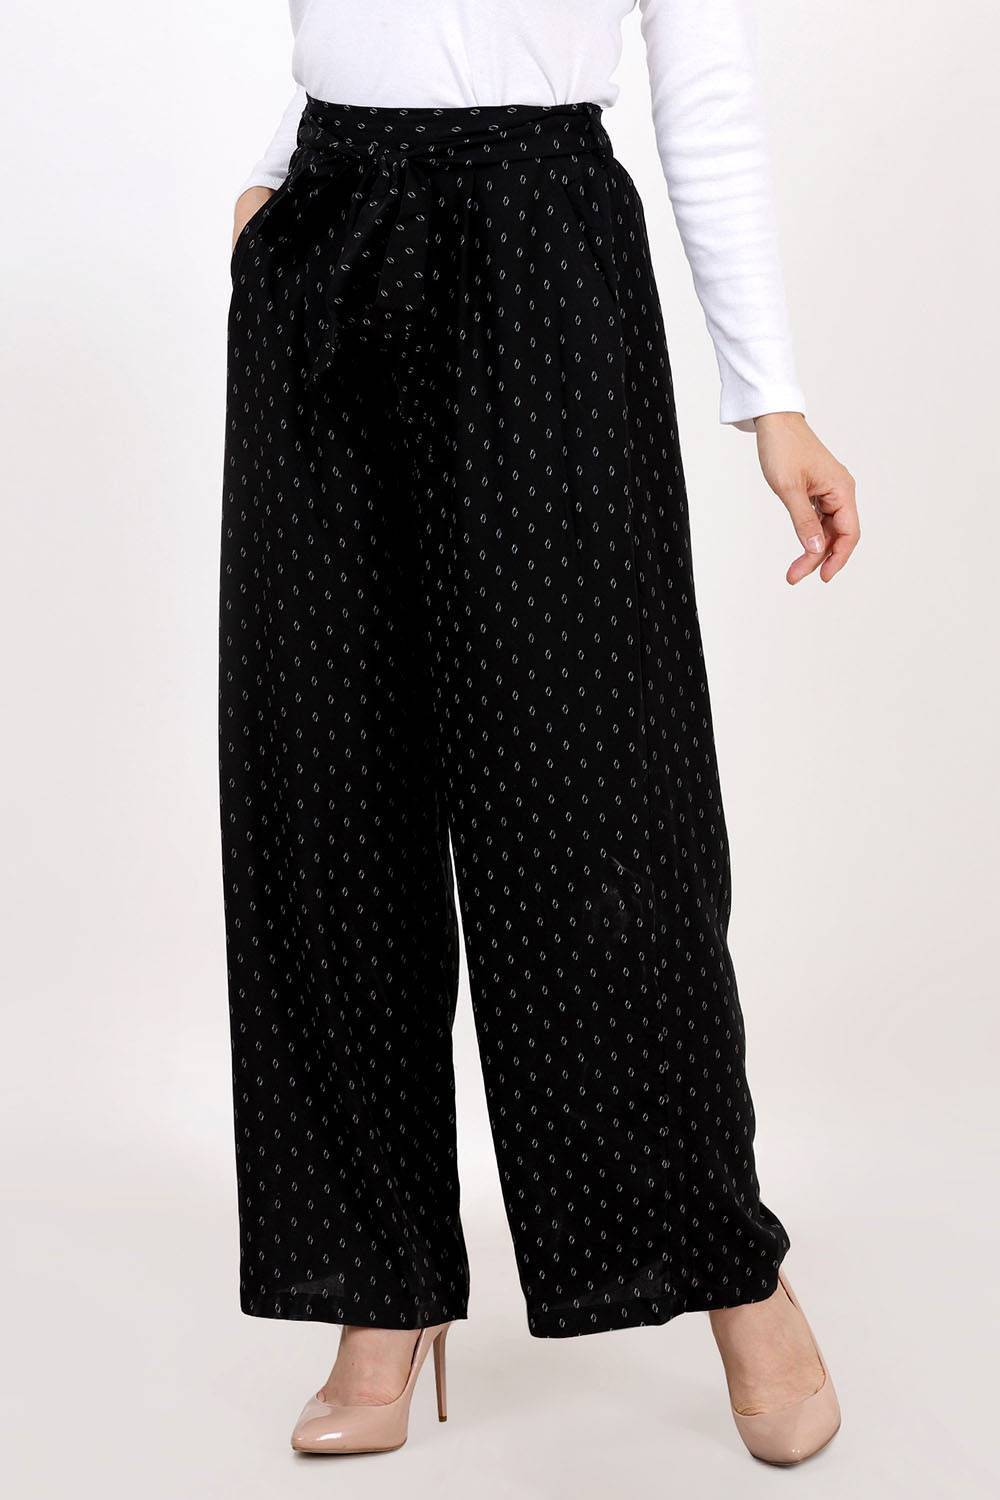 LASTINCH All Sizes Black Pleated Trouser with Belt XXS-8XL